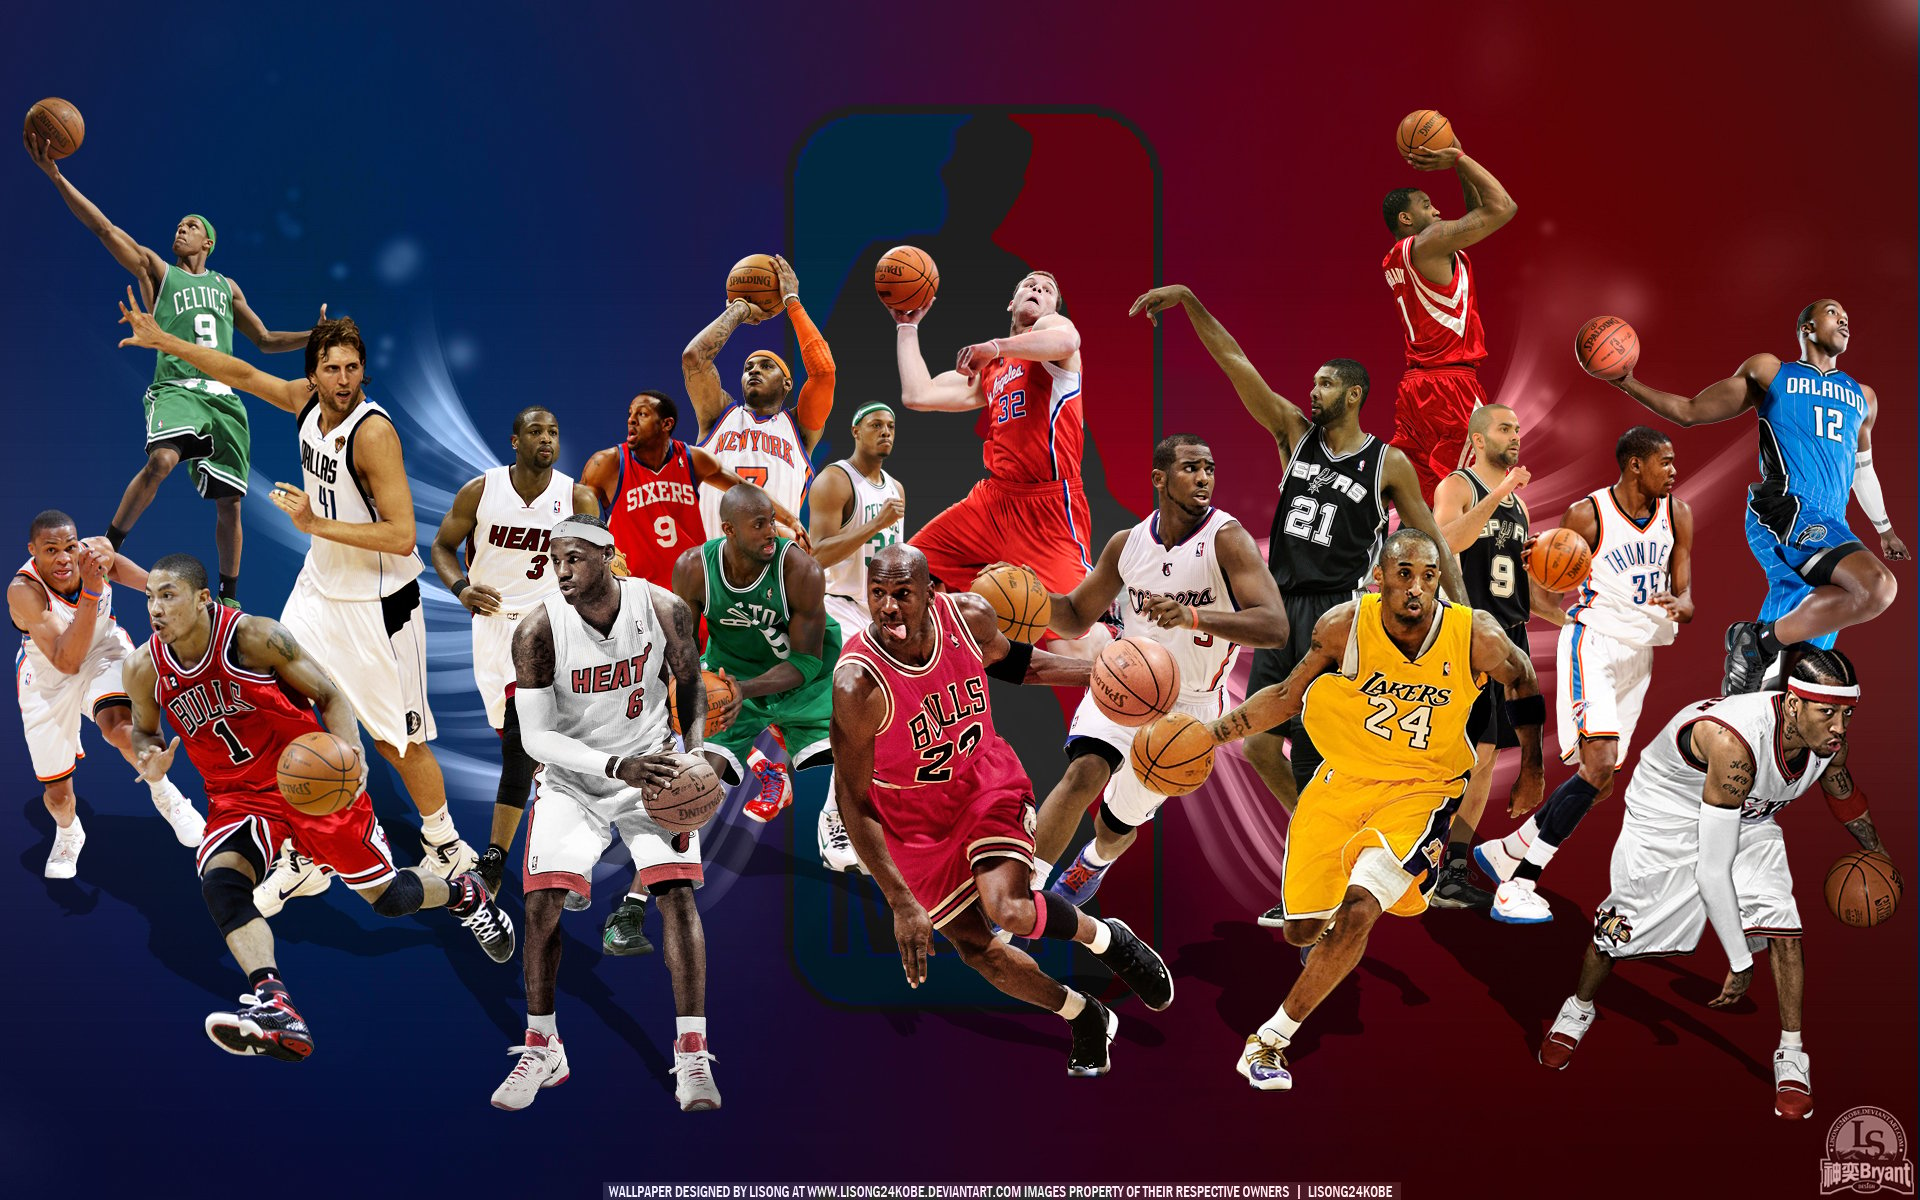 [49+] Cool NBA Wallpapers for iPhone on WallpaperSafari